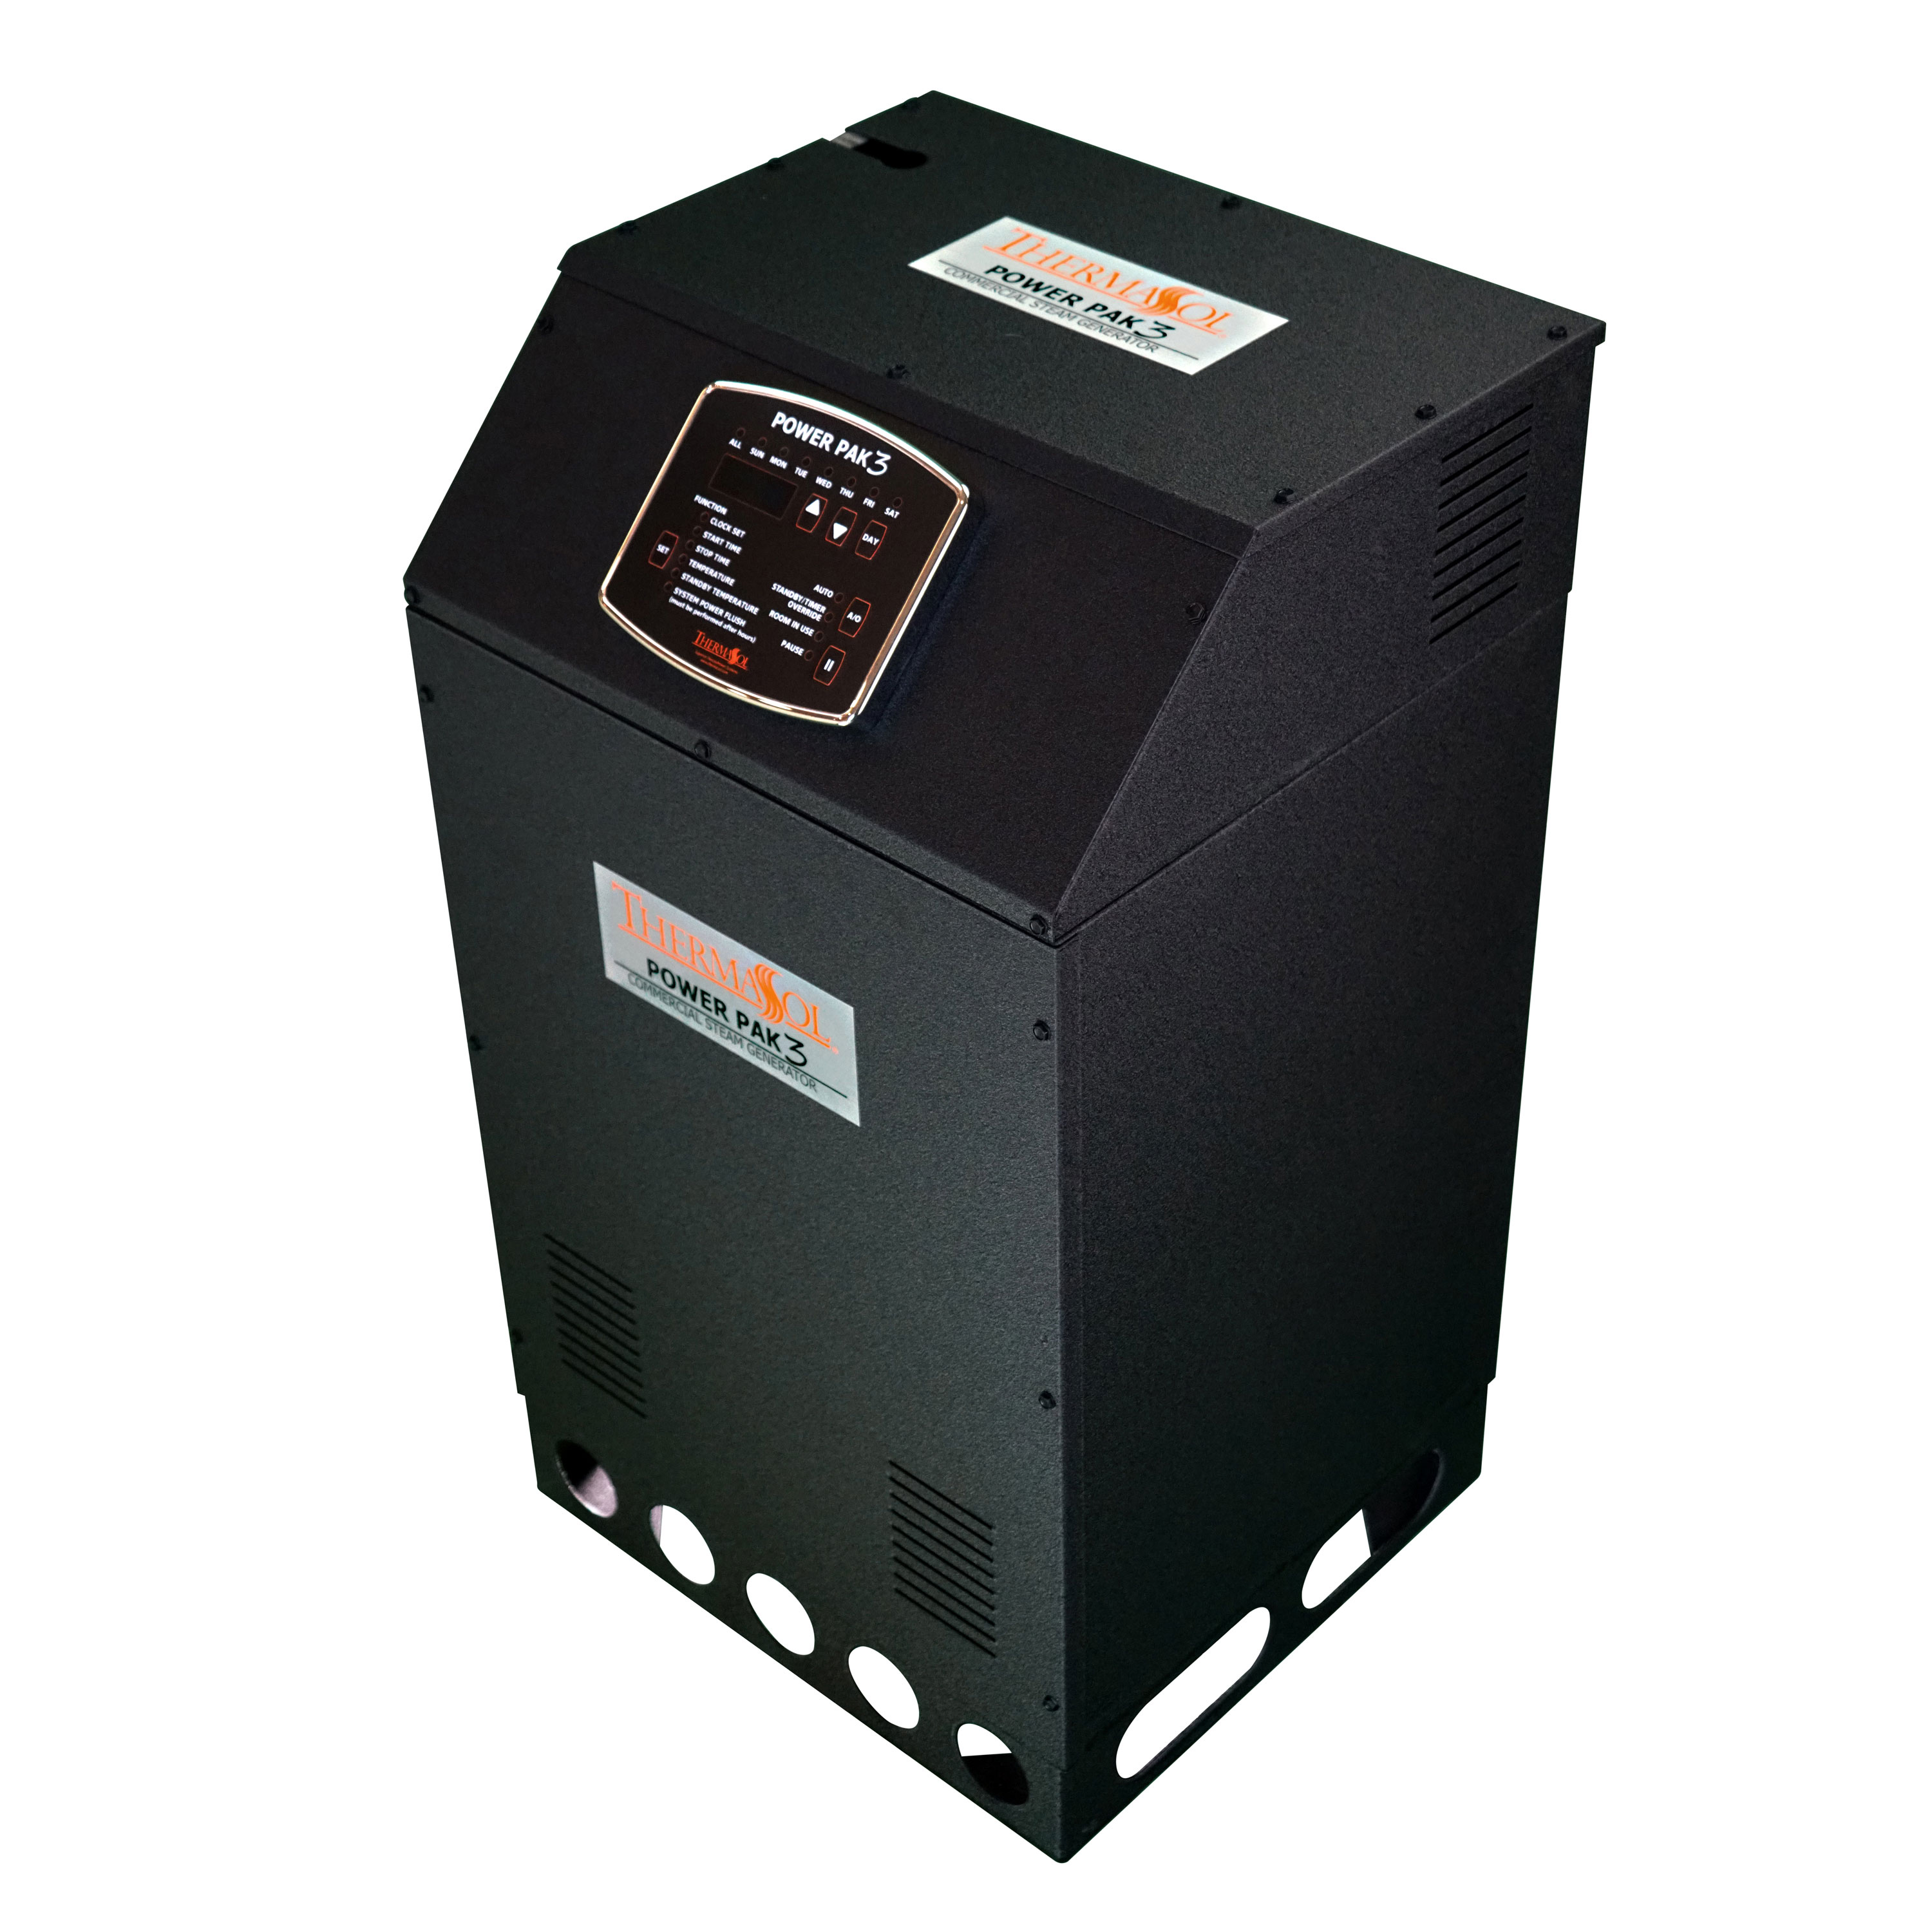 Thermasol PP18SR-480 PowerPak Series III Commercial Steam Generator - 18SR-480